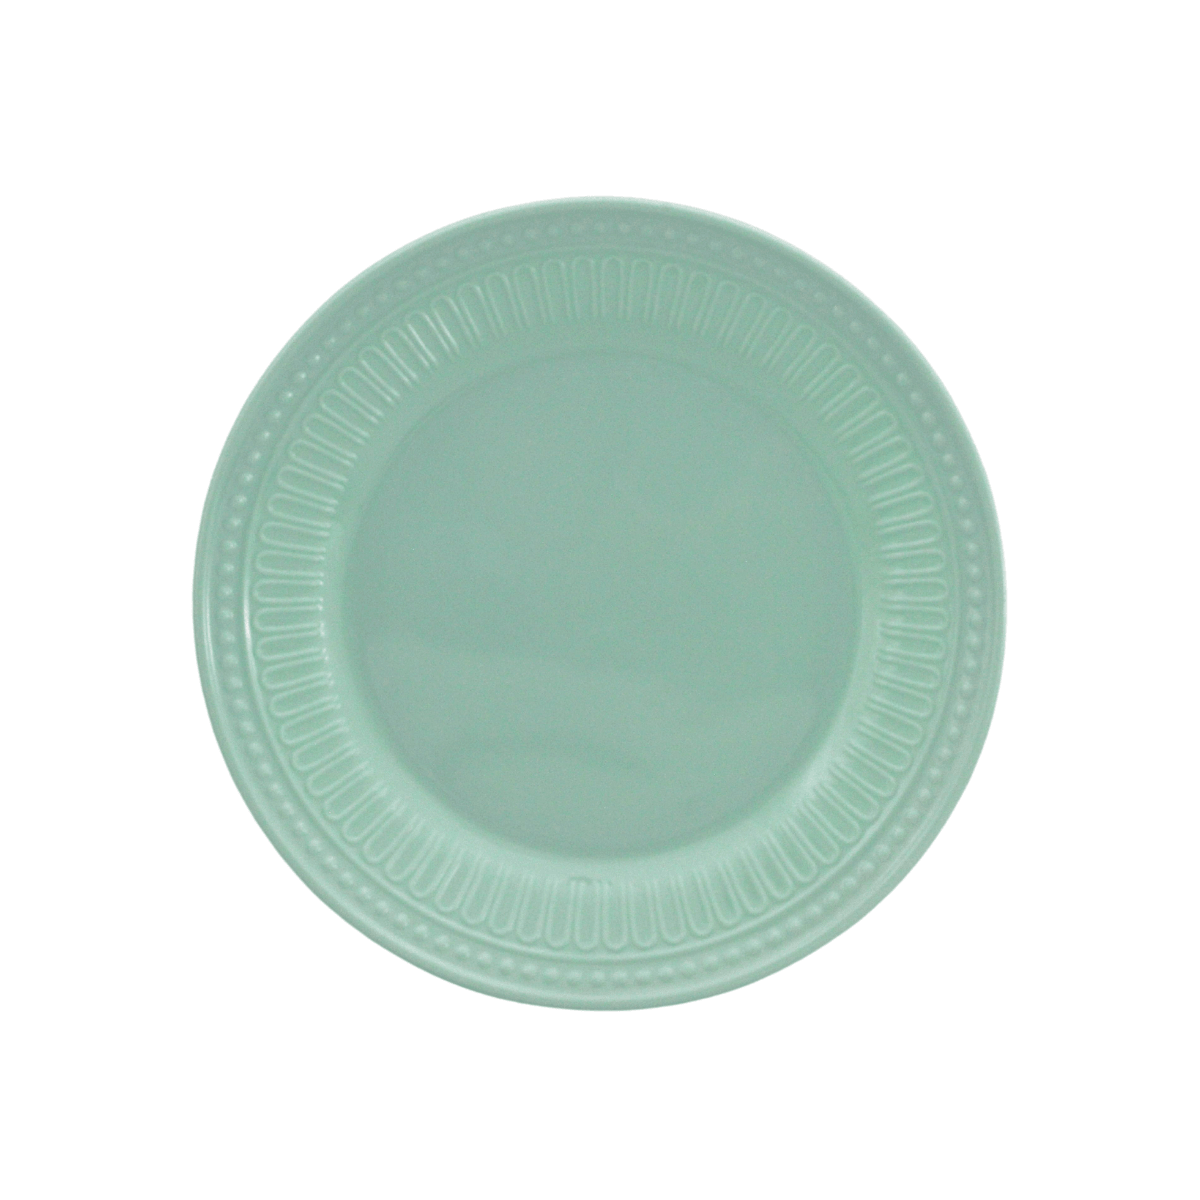 Plato Trinche redondo de 22 cm Grueso de Melamina, color Aqua Anforama - ANFORAMA (Todo para mi Cocina)